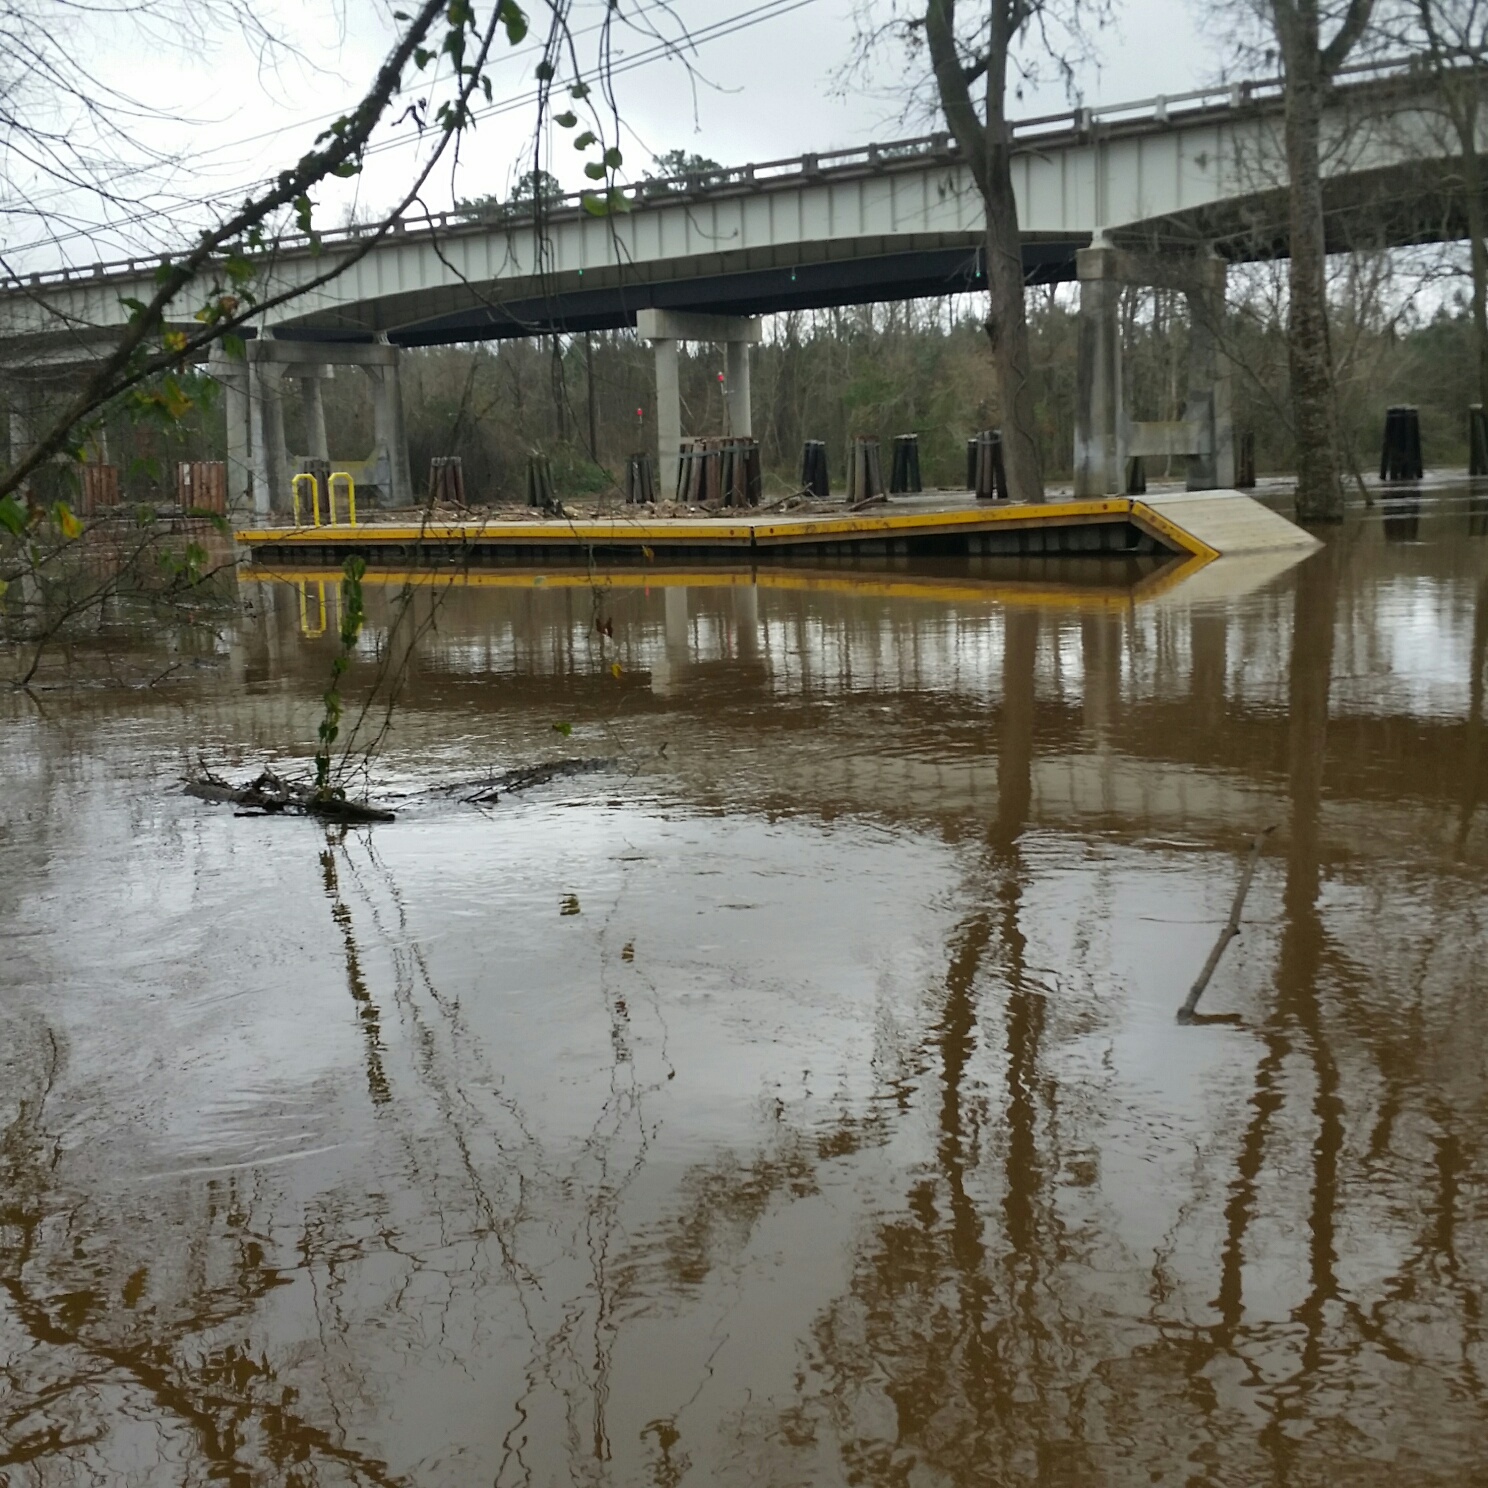 Flooding along Cape Fear River impacts interests along river